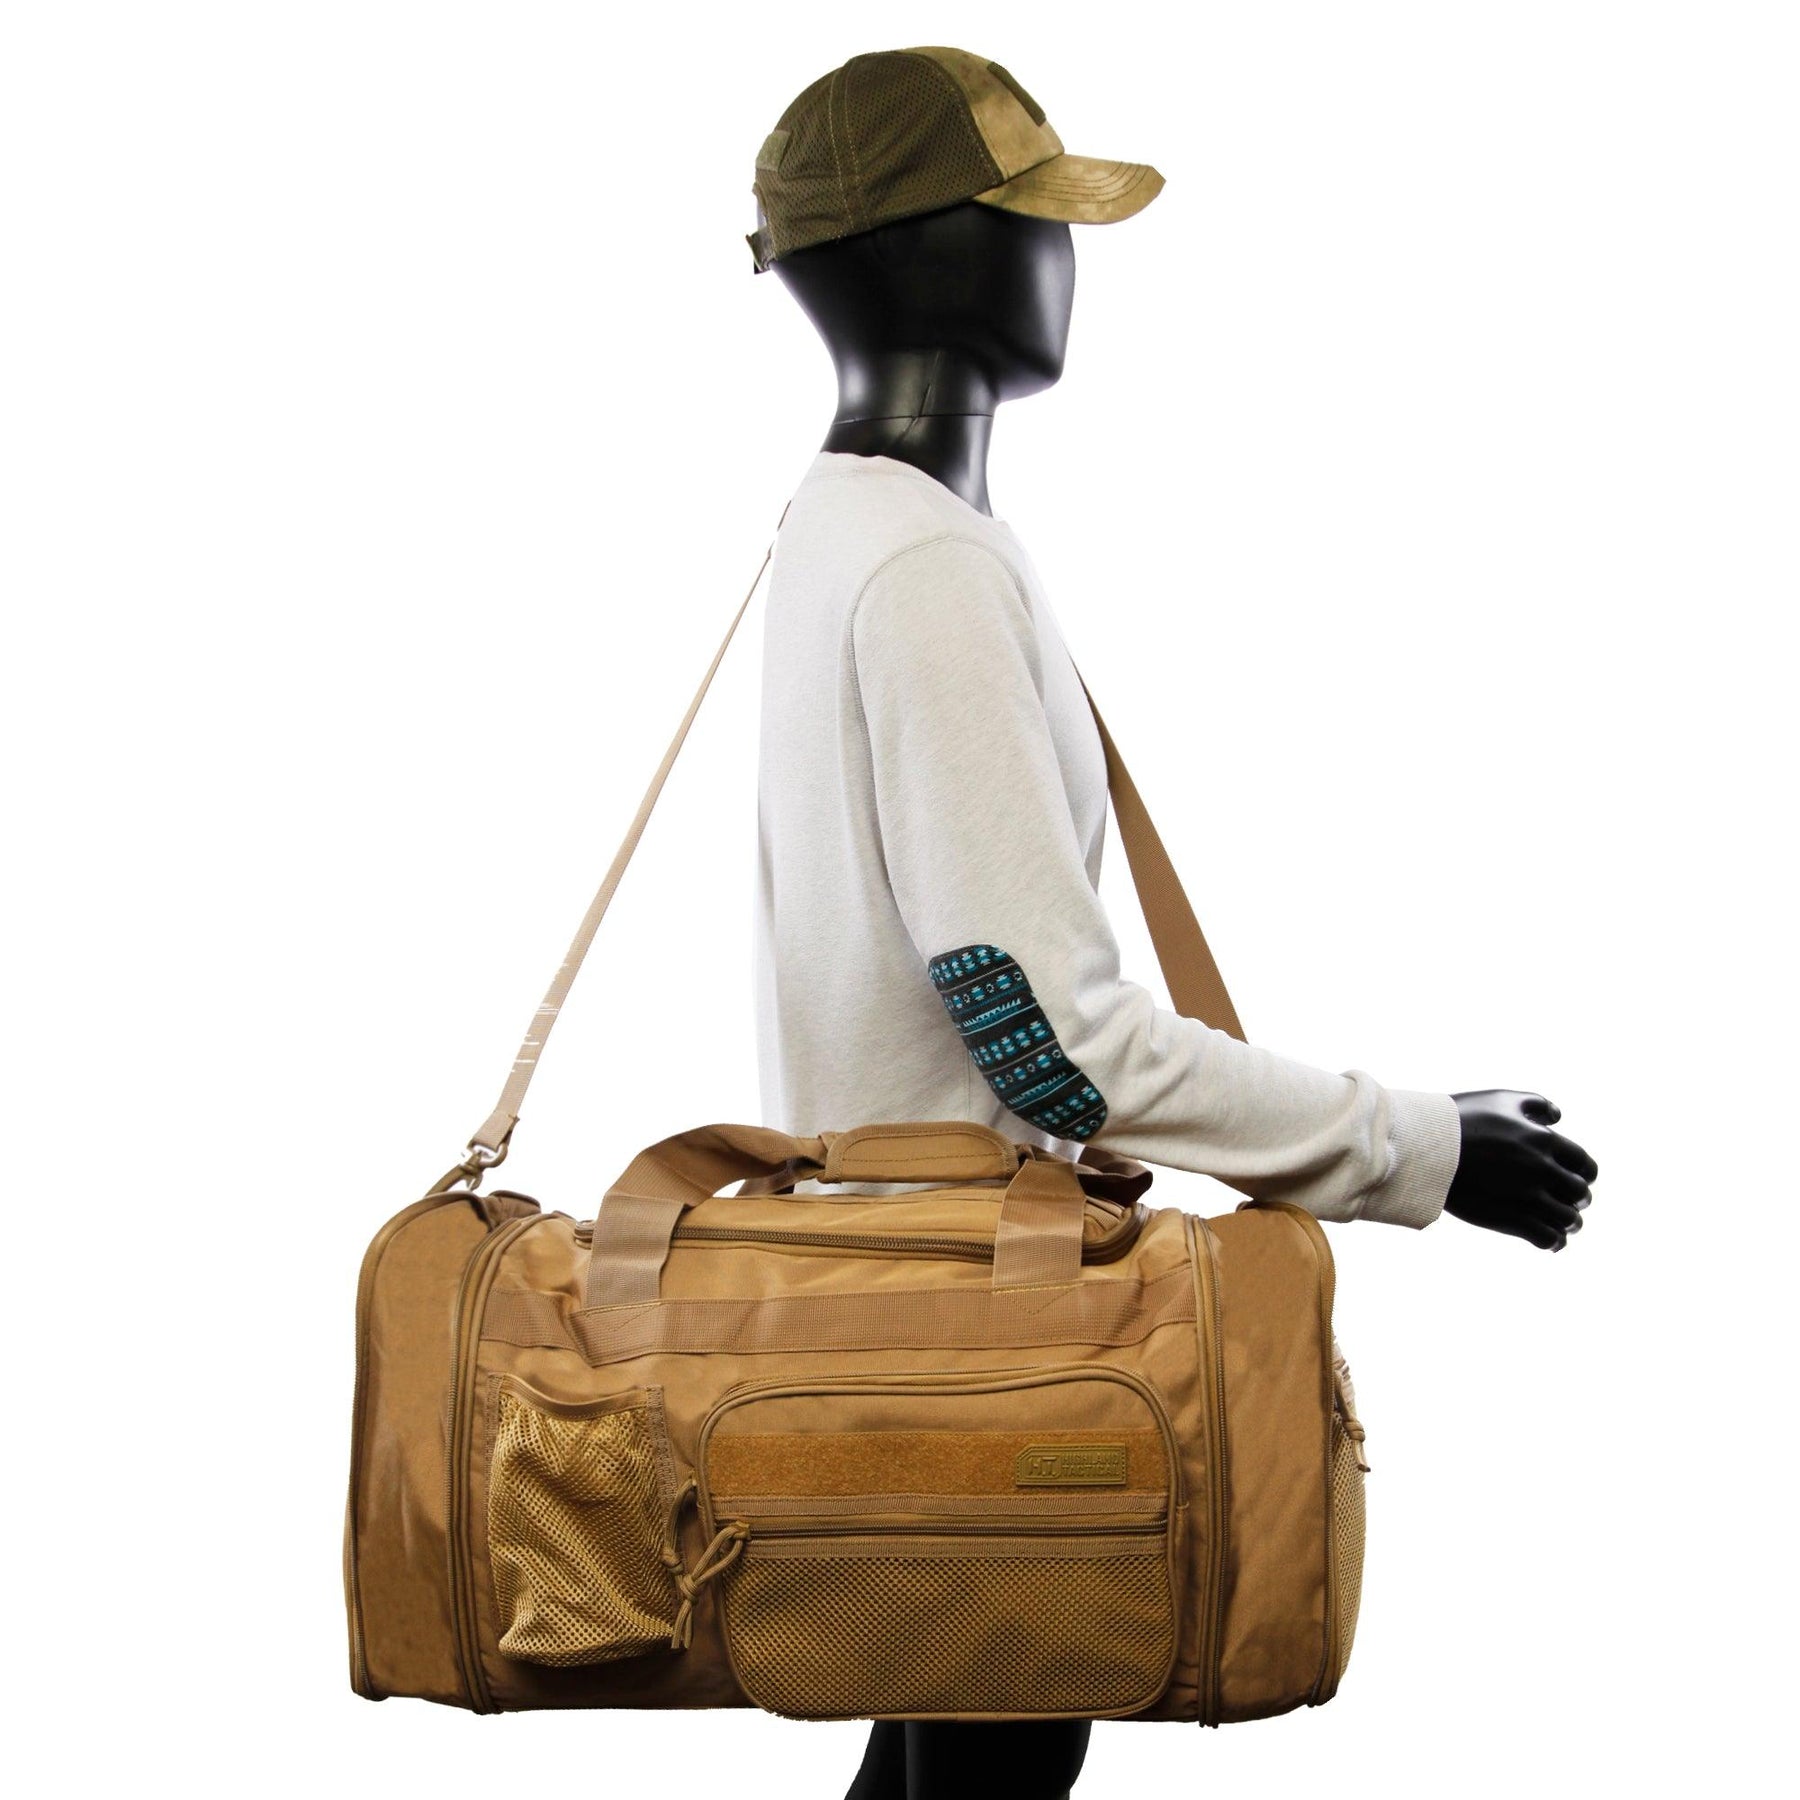 Tactical Duffel Bags  Military Duffel Bags – Highland Tactical